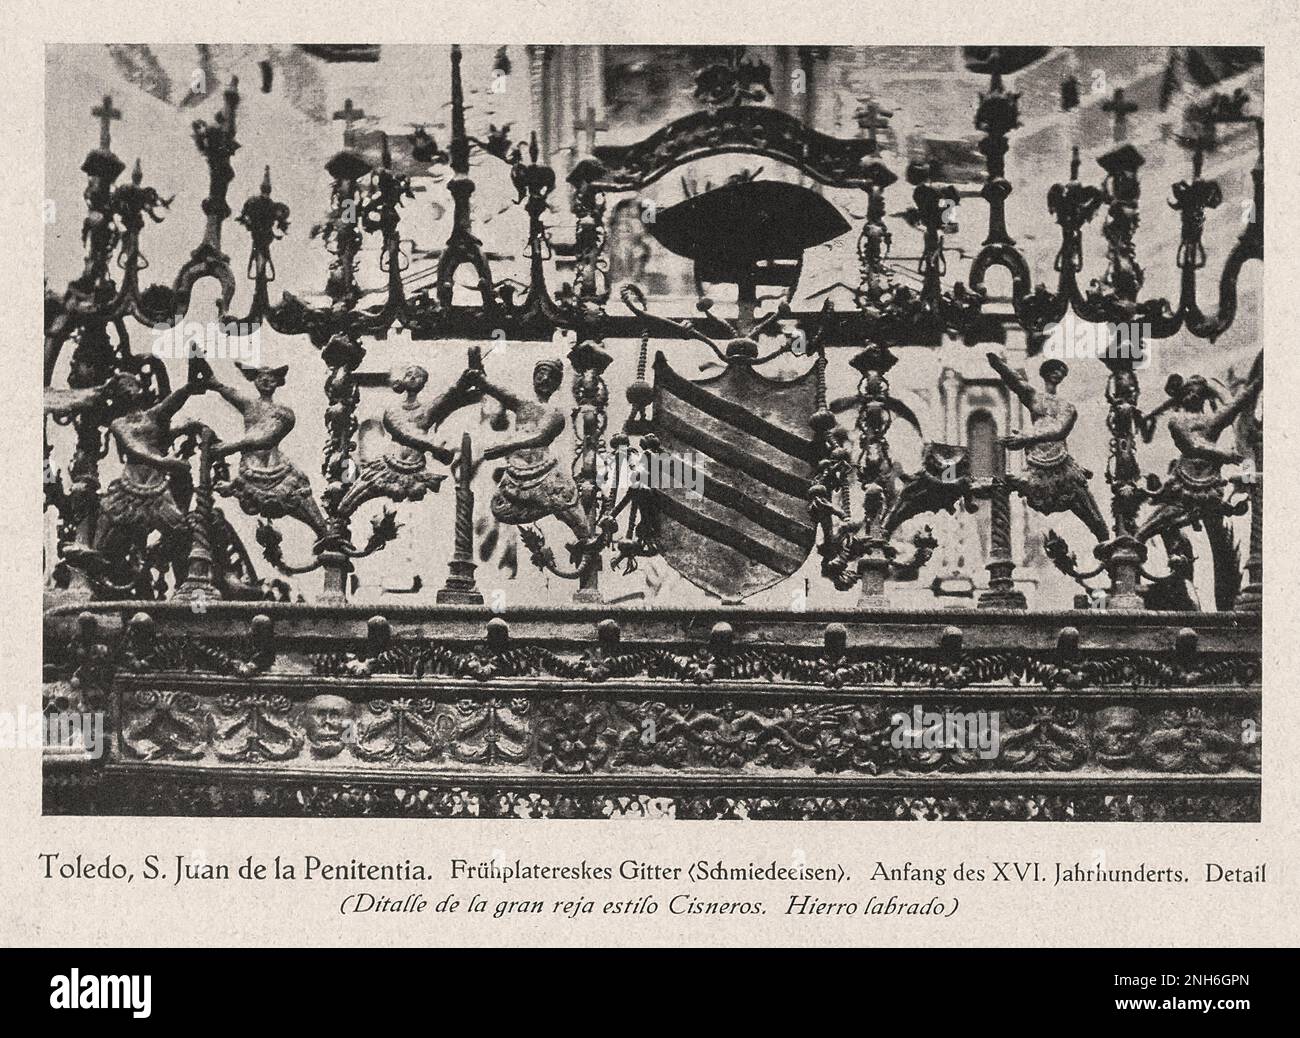 Architecture of Old Spain. Early Plateresque lattice (wrought iron). Beginning of the XVI century. Detail of lattice (Cisneros style). Toledo, S. Juan de la Penitentia. Stock Photo